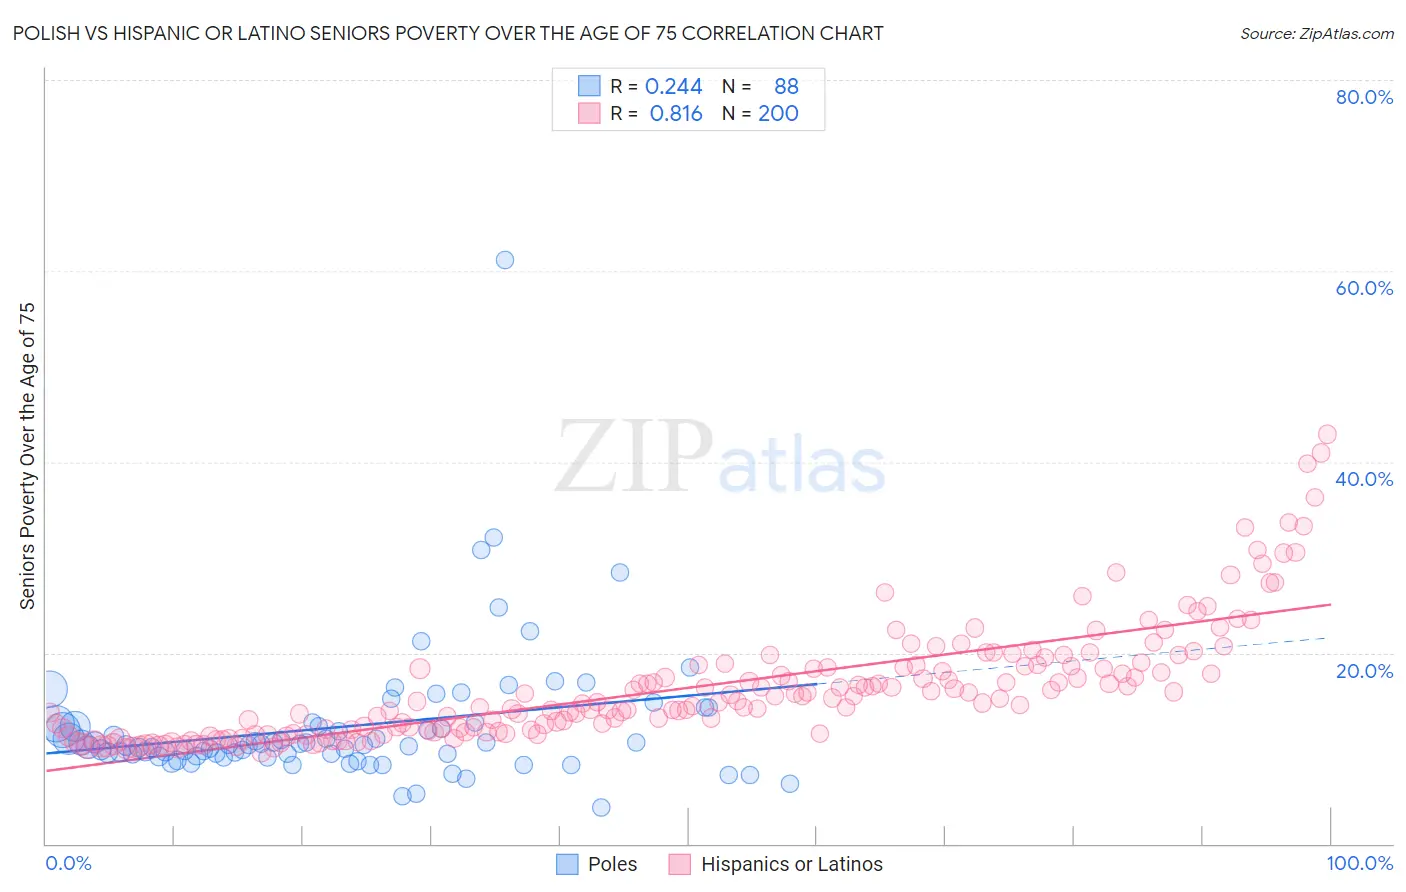 Polish vs Hispanic or Latino Seniors Poverty Over the Age of 75